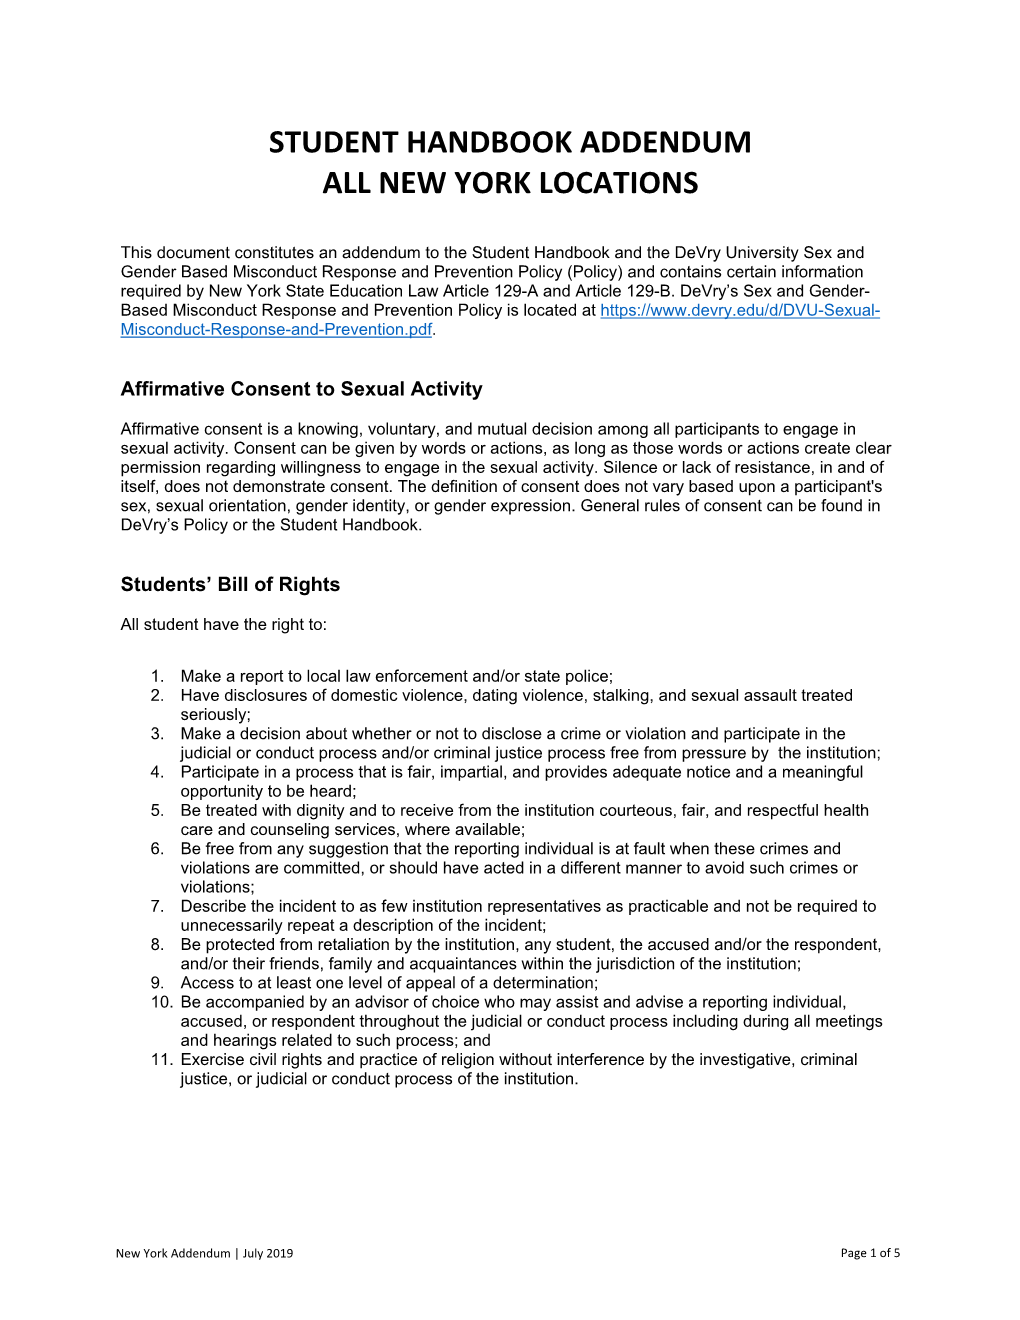 Student Handbook Addendum All New York Locations